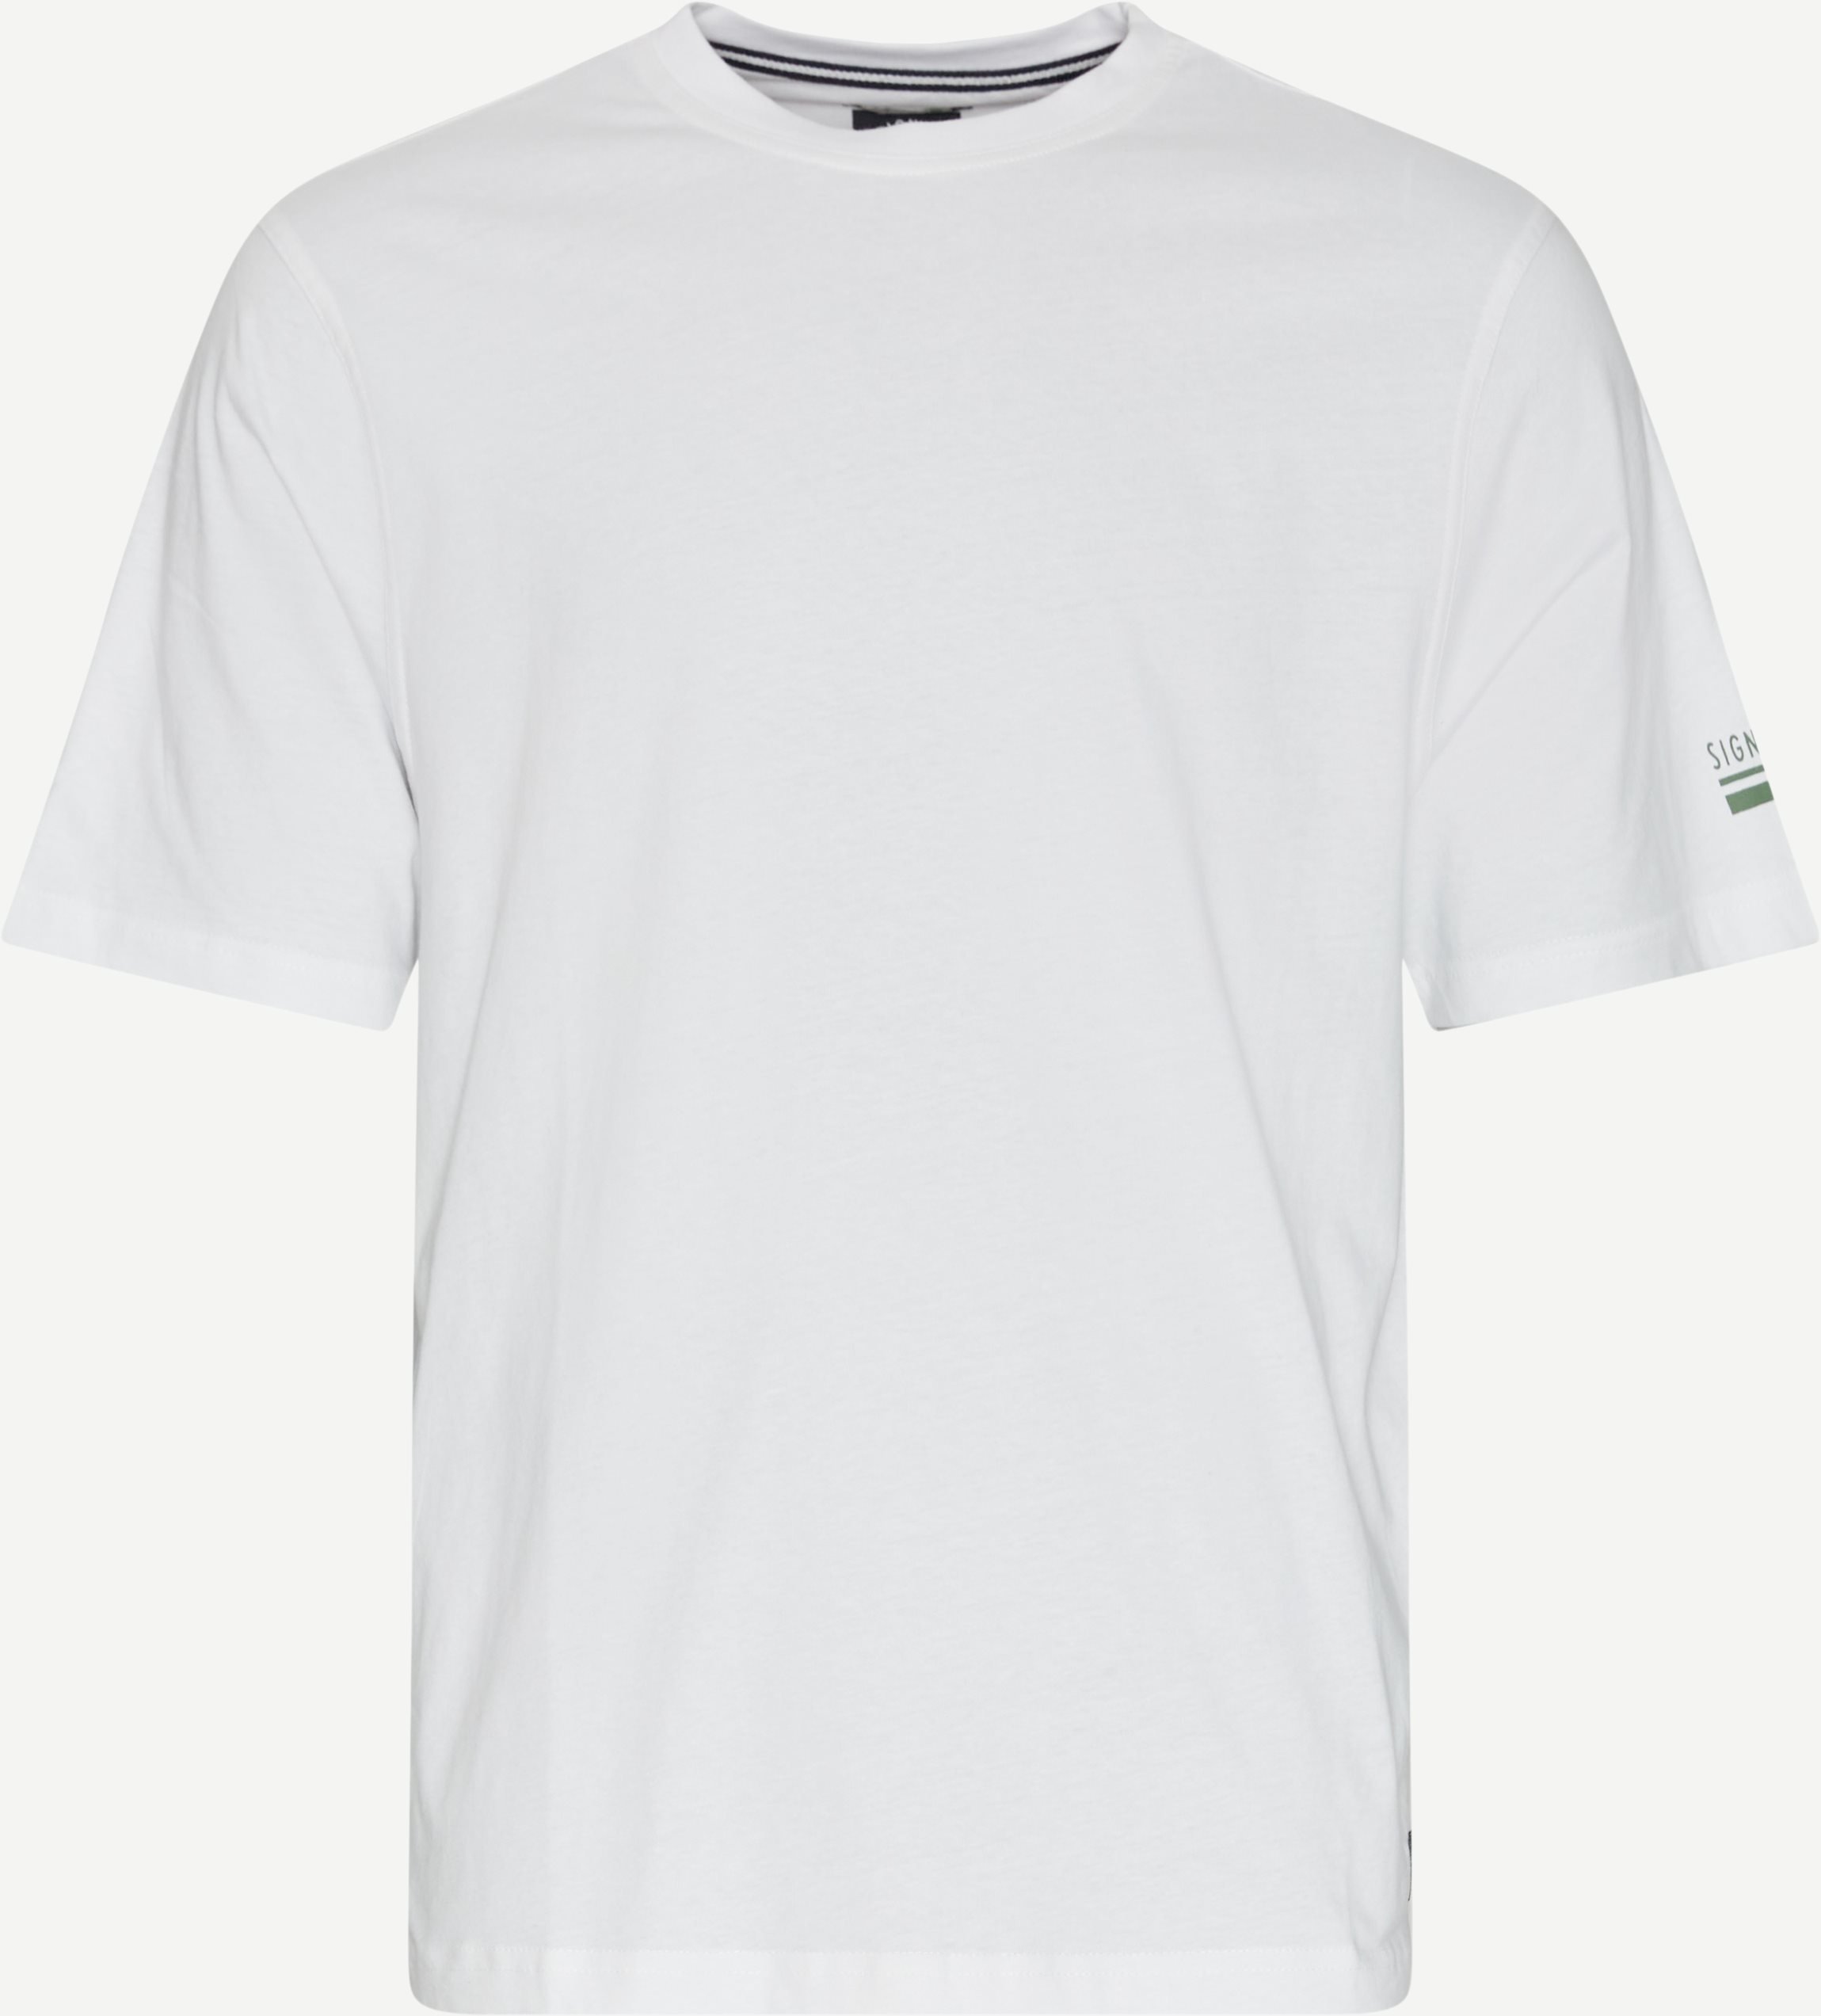 Wayne T-shirt - T-shirts - Regular fit - Hvid